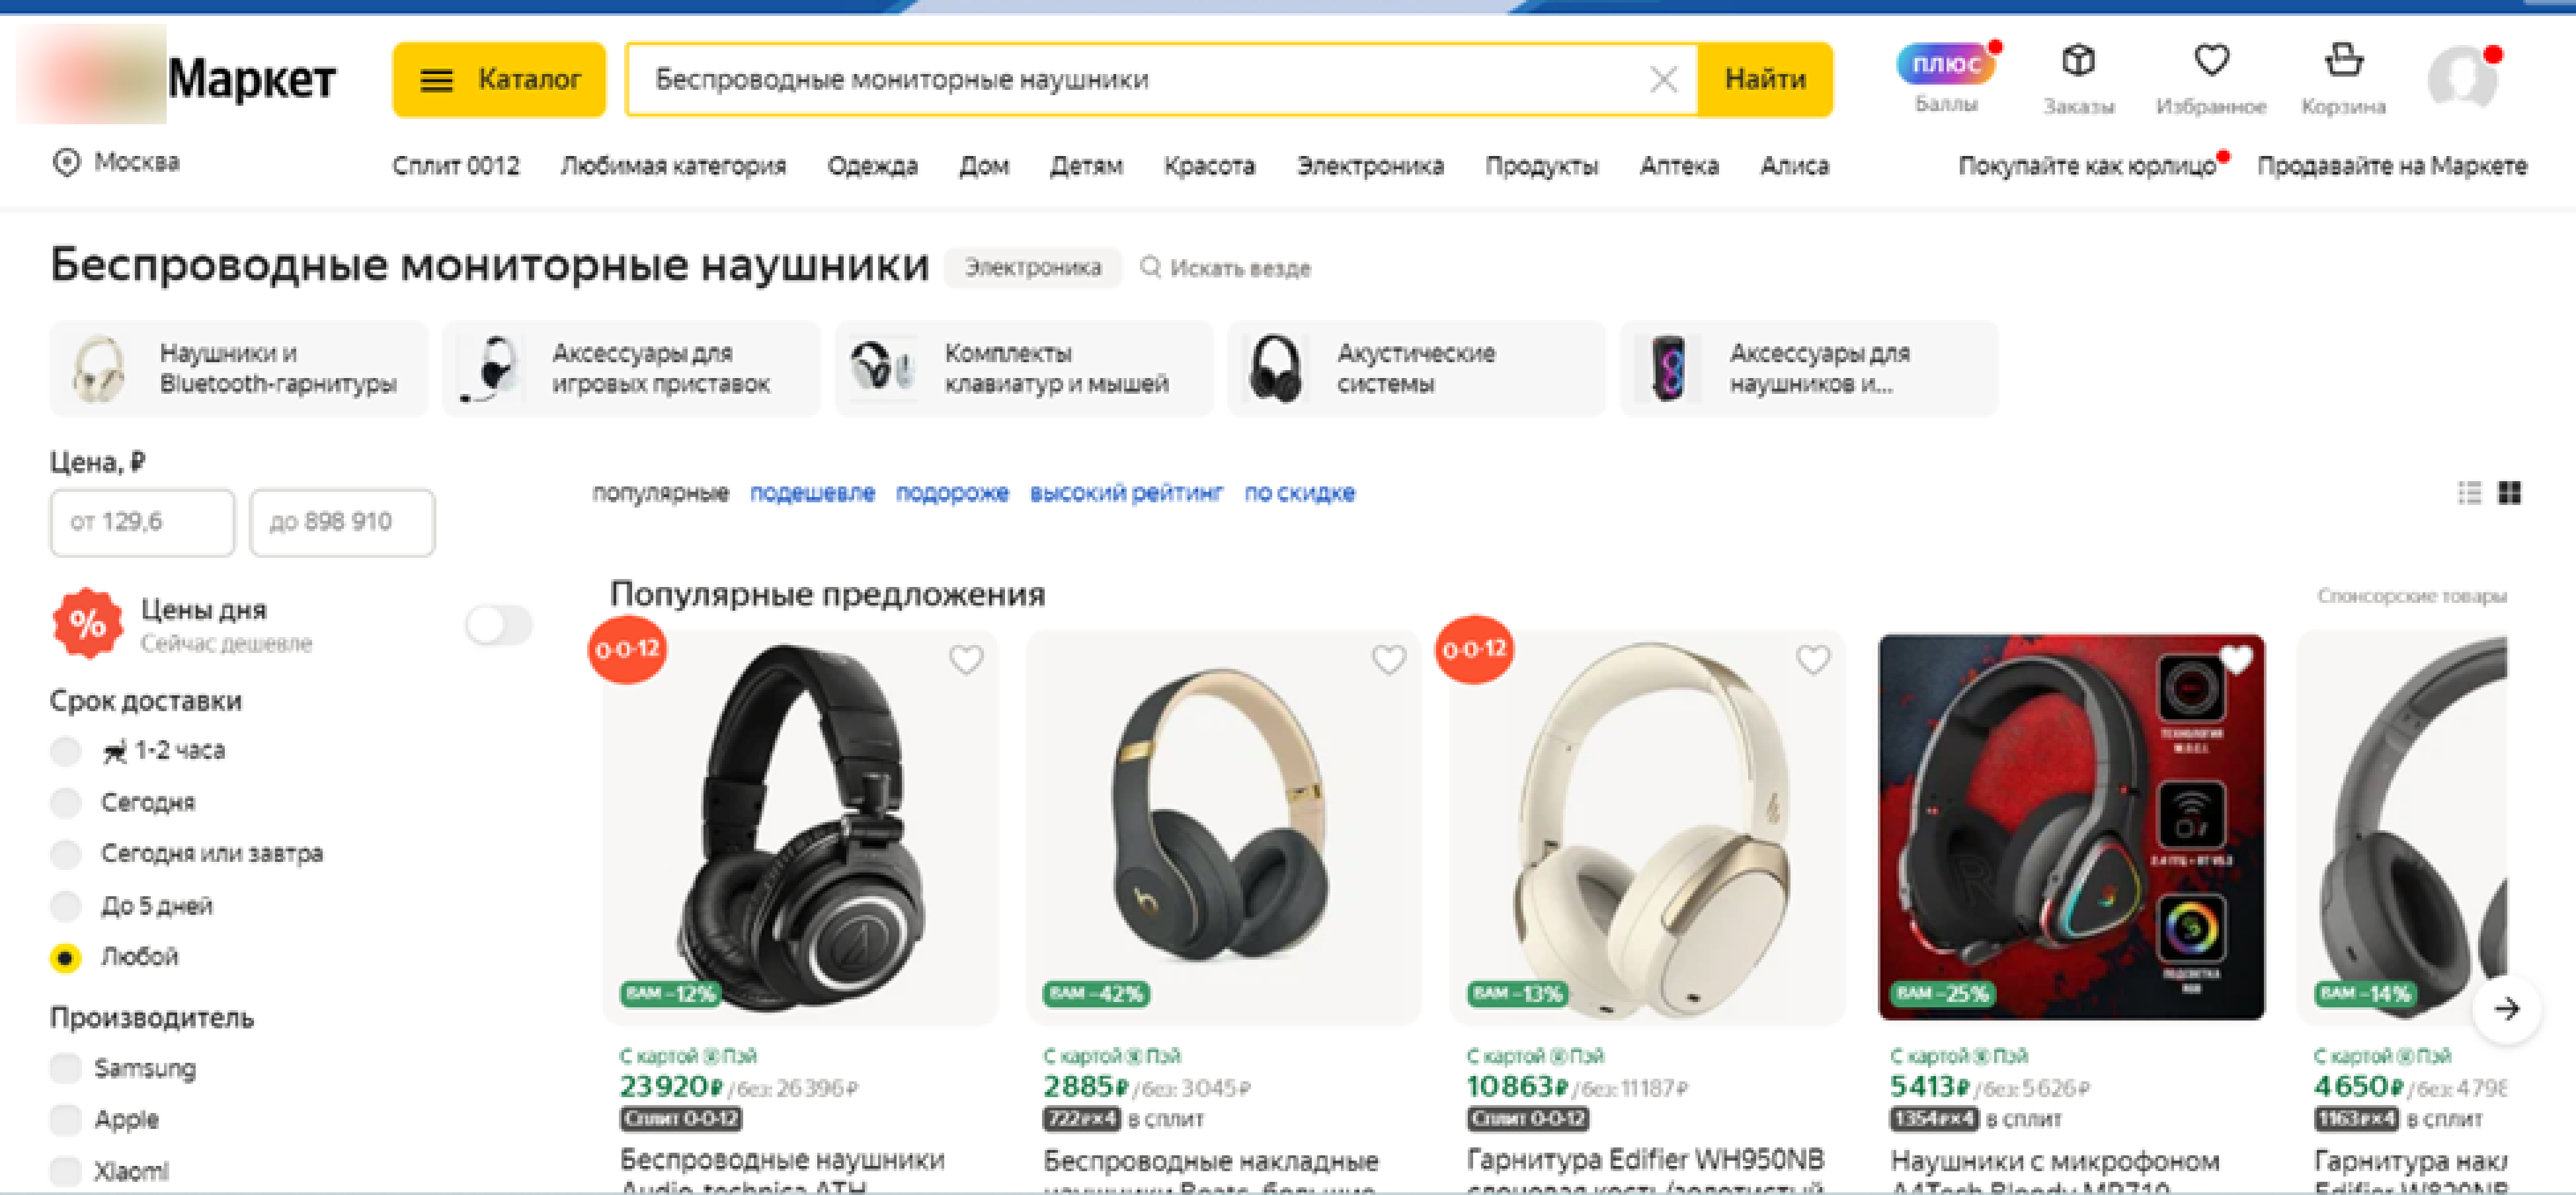 Источник: скриншот страницы Яндекс Маркета (https://market.yandex.ru/search?text=мониторные%20наушники%20bluetooth)